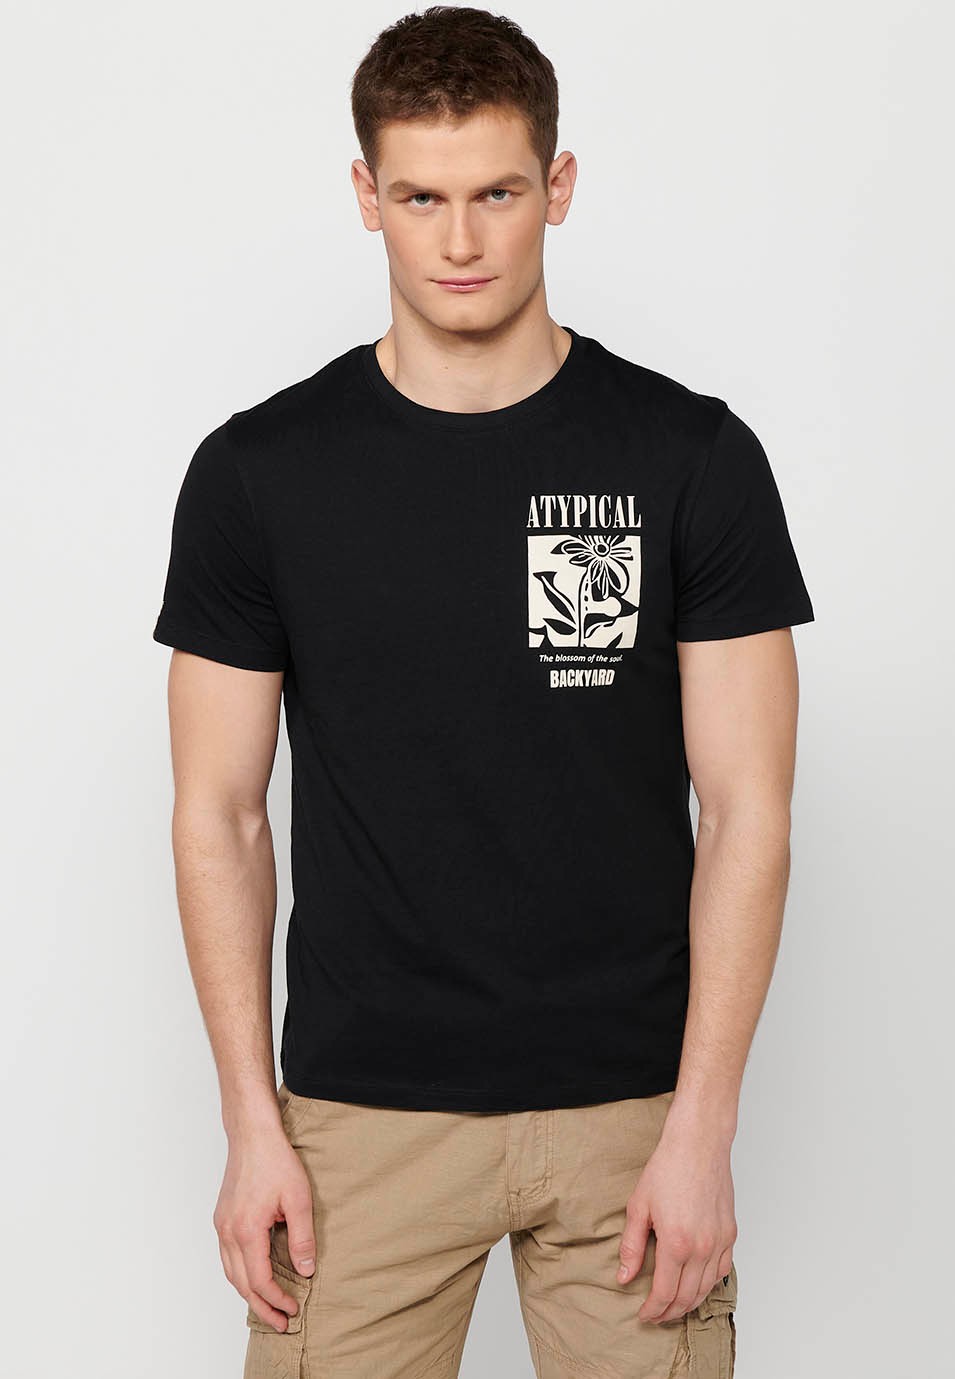 Men's black short-sleeved cotton T-shirt, round neck and back print